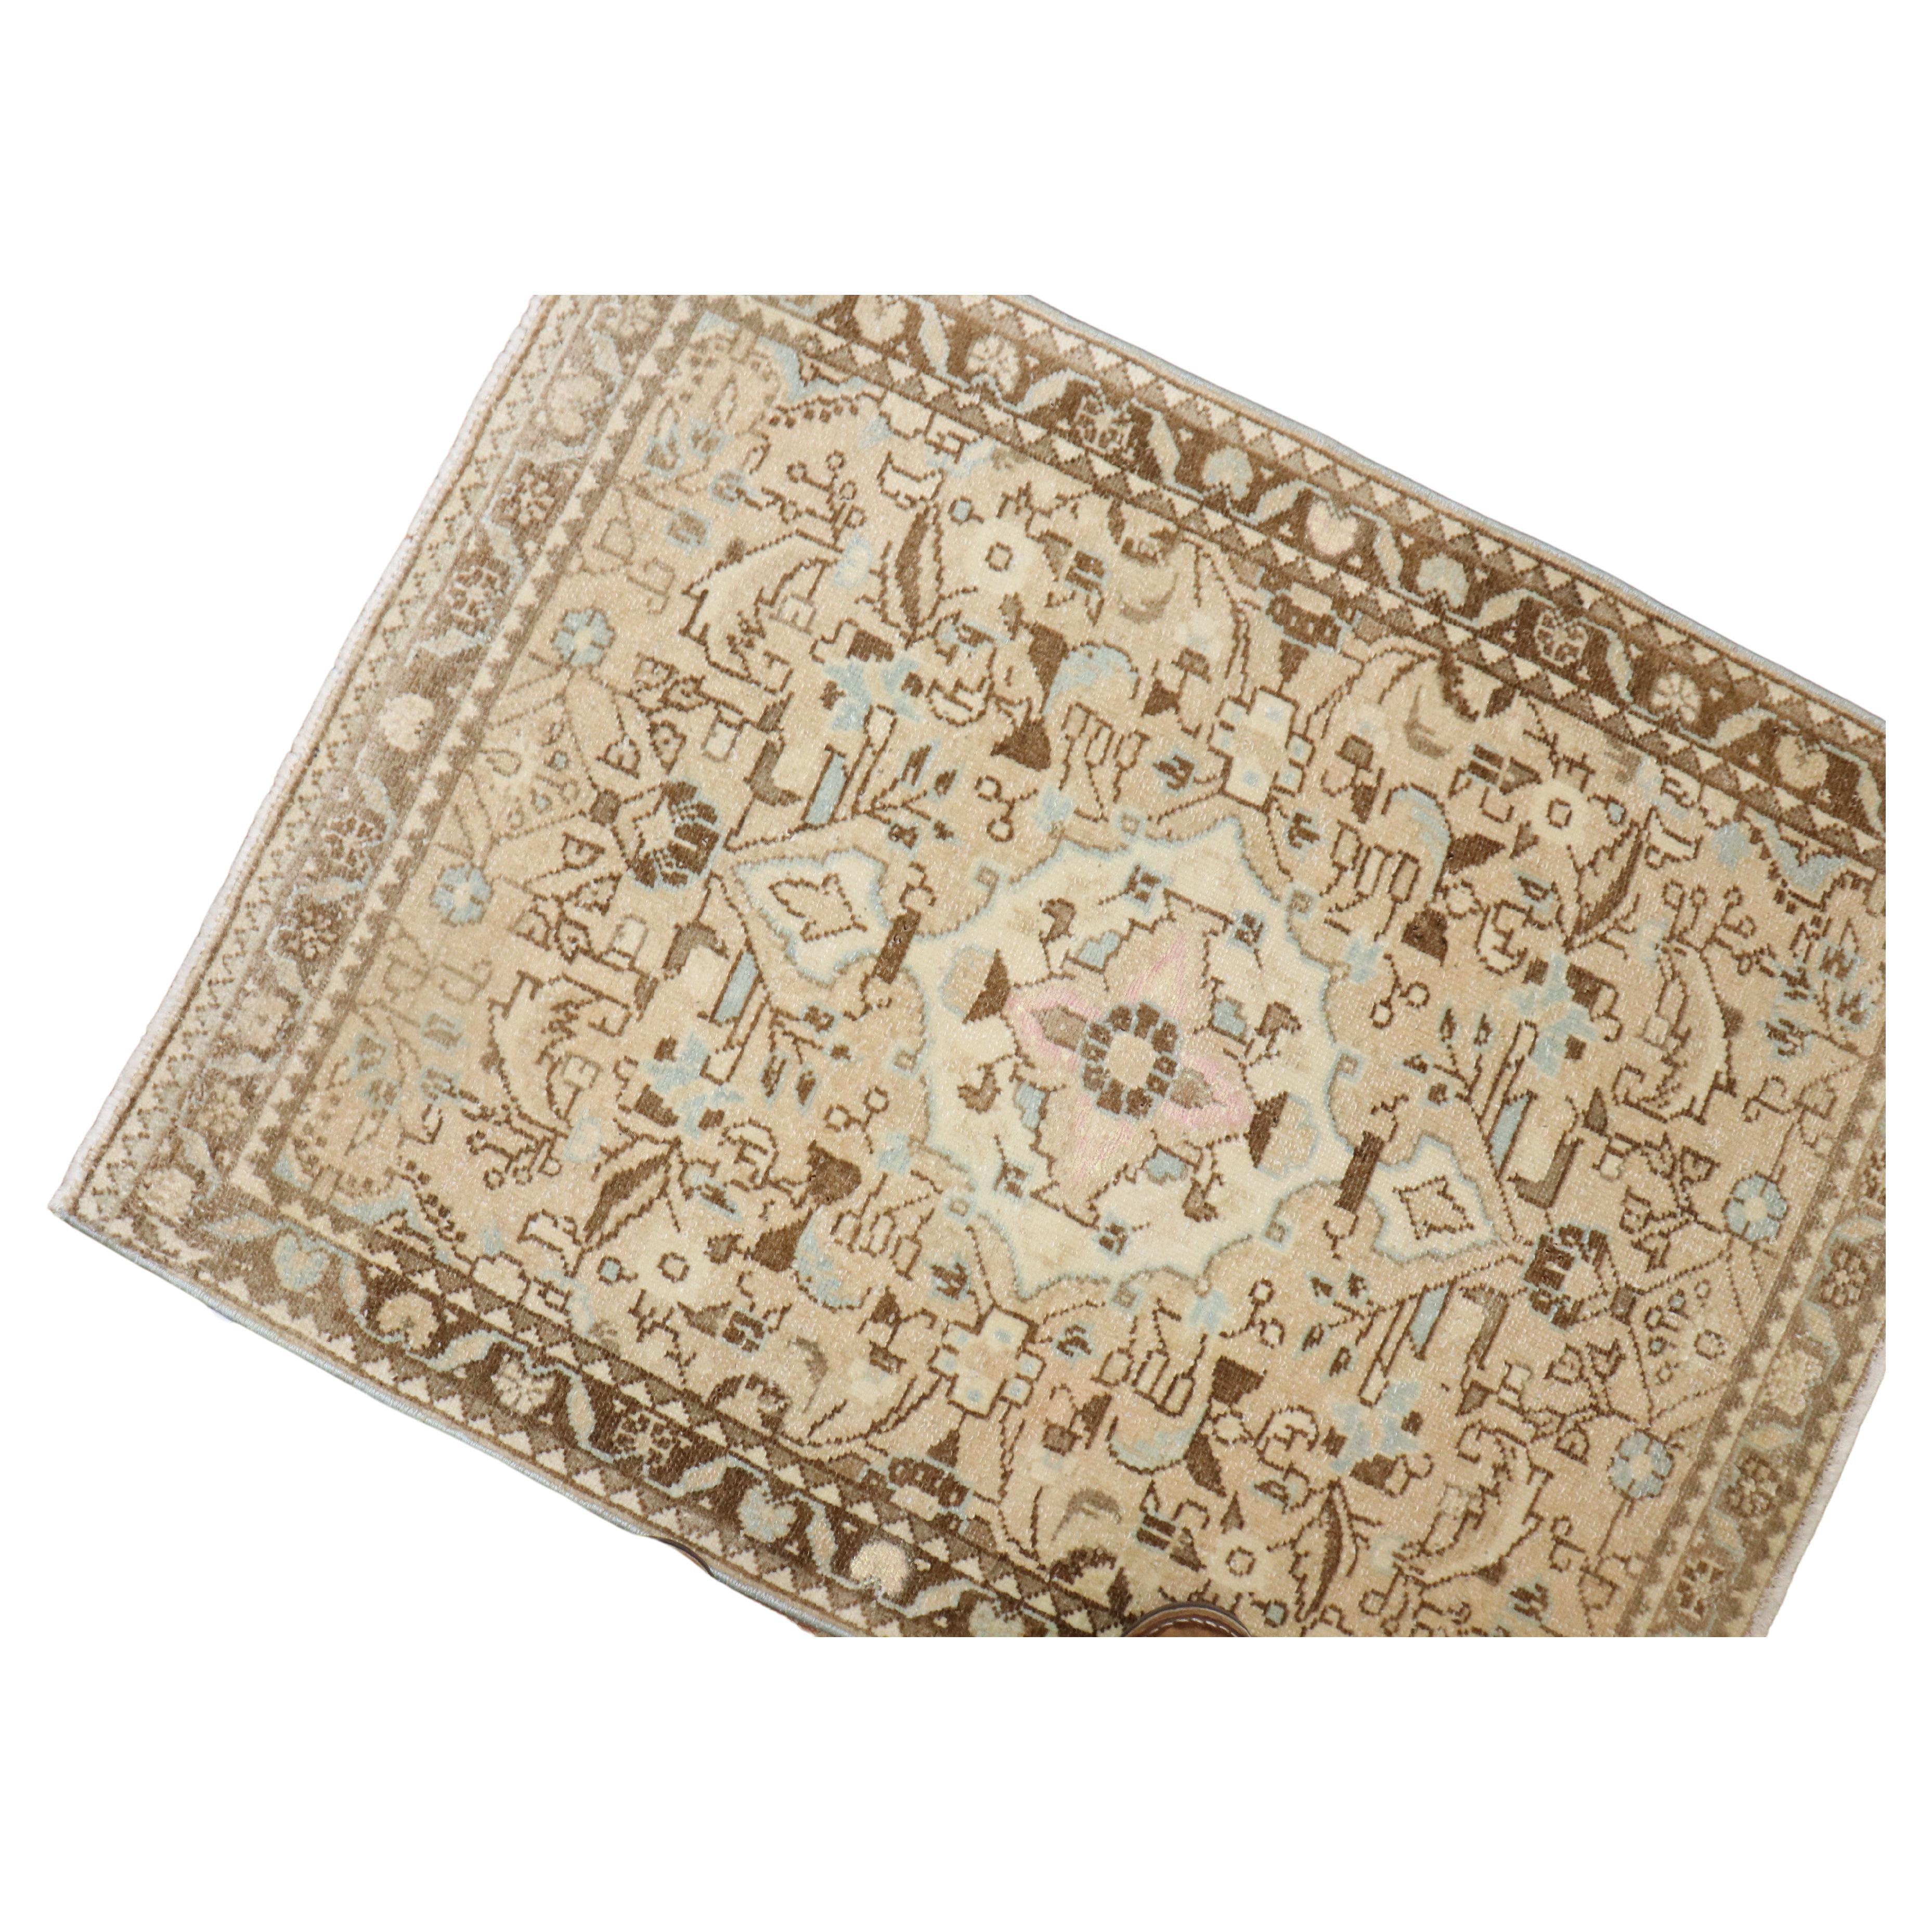 Mid 20th century Neutral Color Persian Sarouk Mini size rug

Measures: 2'3'' x 2'11''.